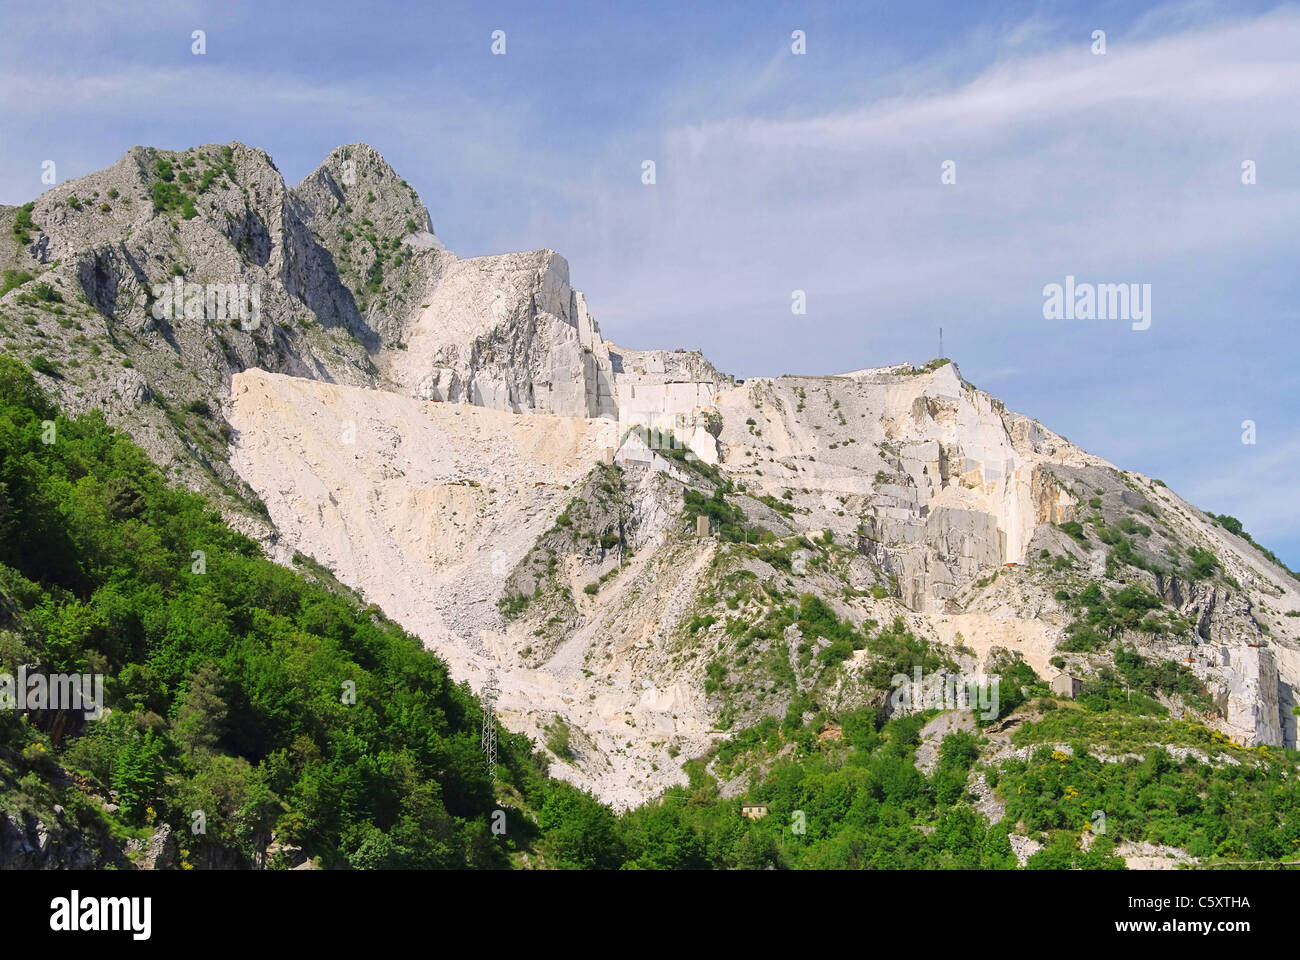 Carrara Marmor Steinbruch - Carrara marble stone pit 24 Stock Photo